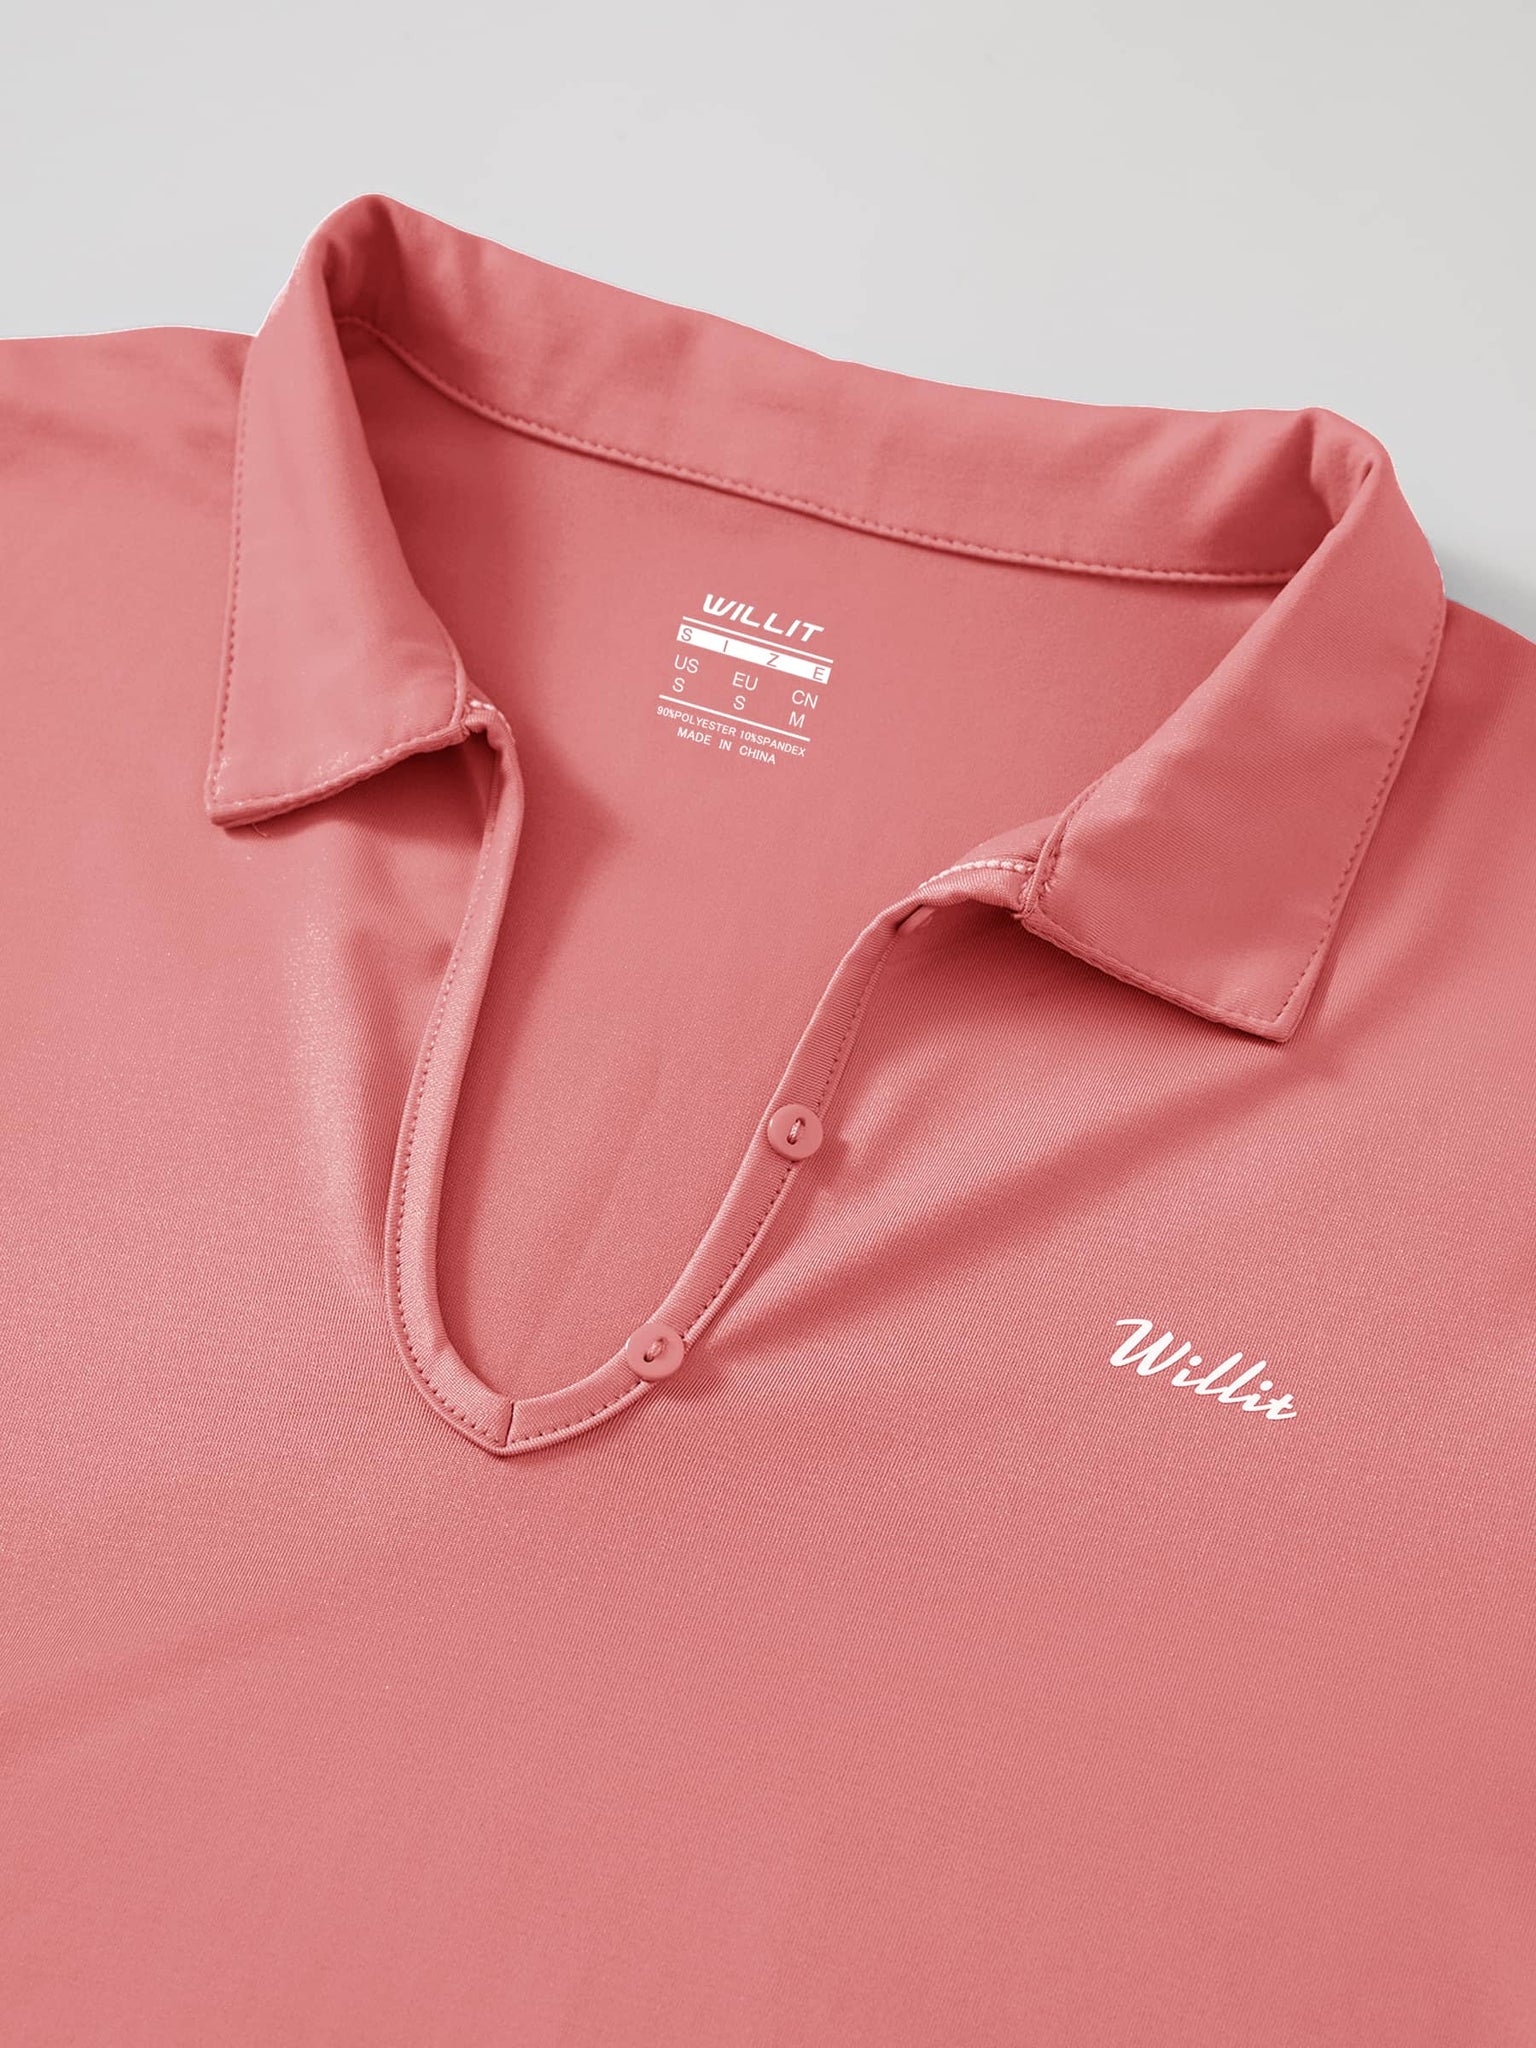 Willit Women's Golf Polo Short Sleeve Shirts_Salmon4